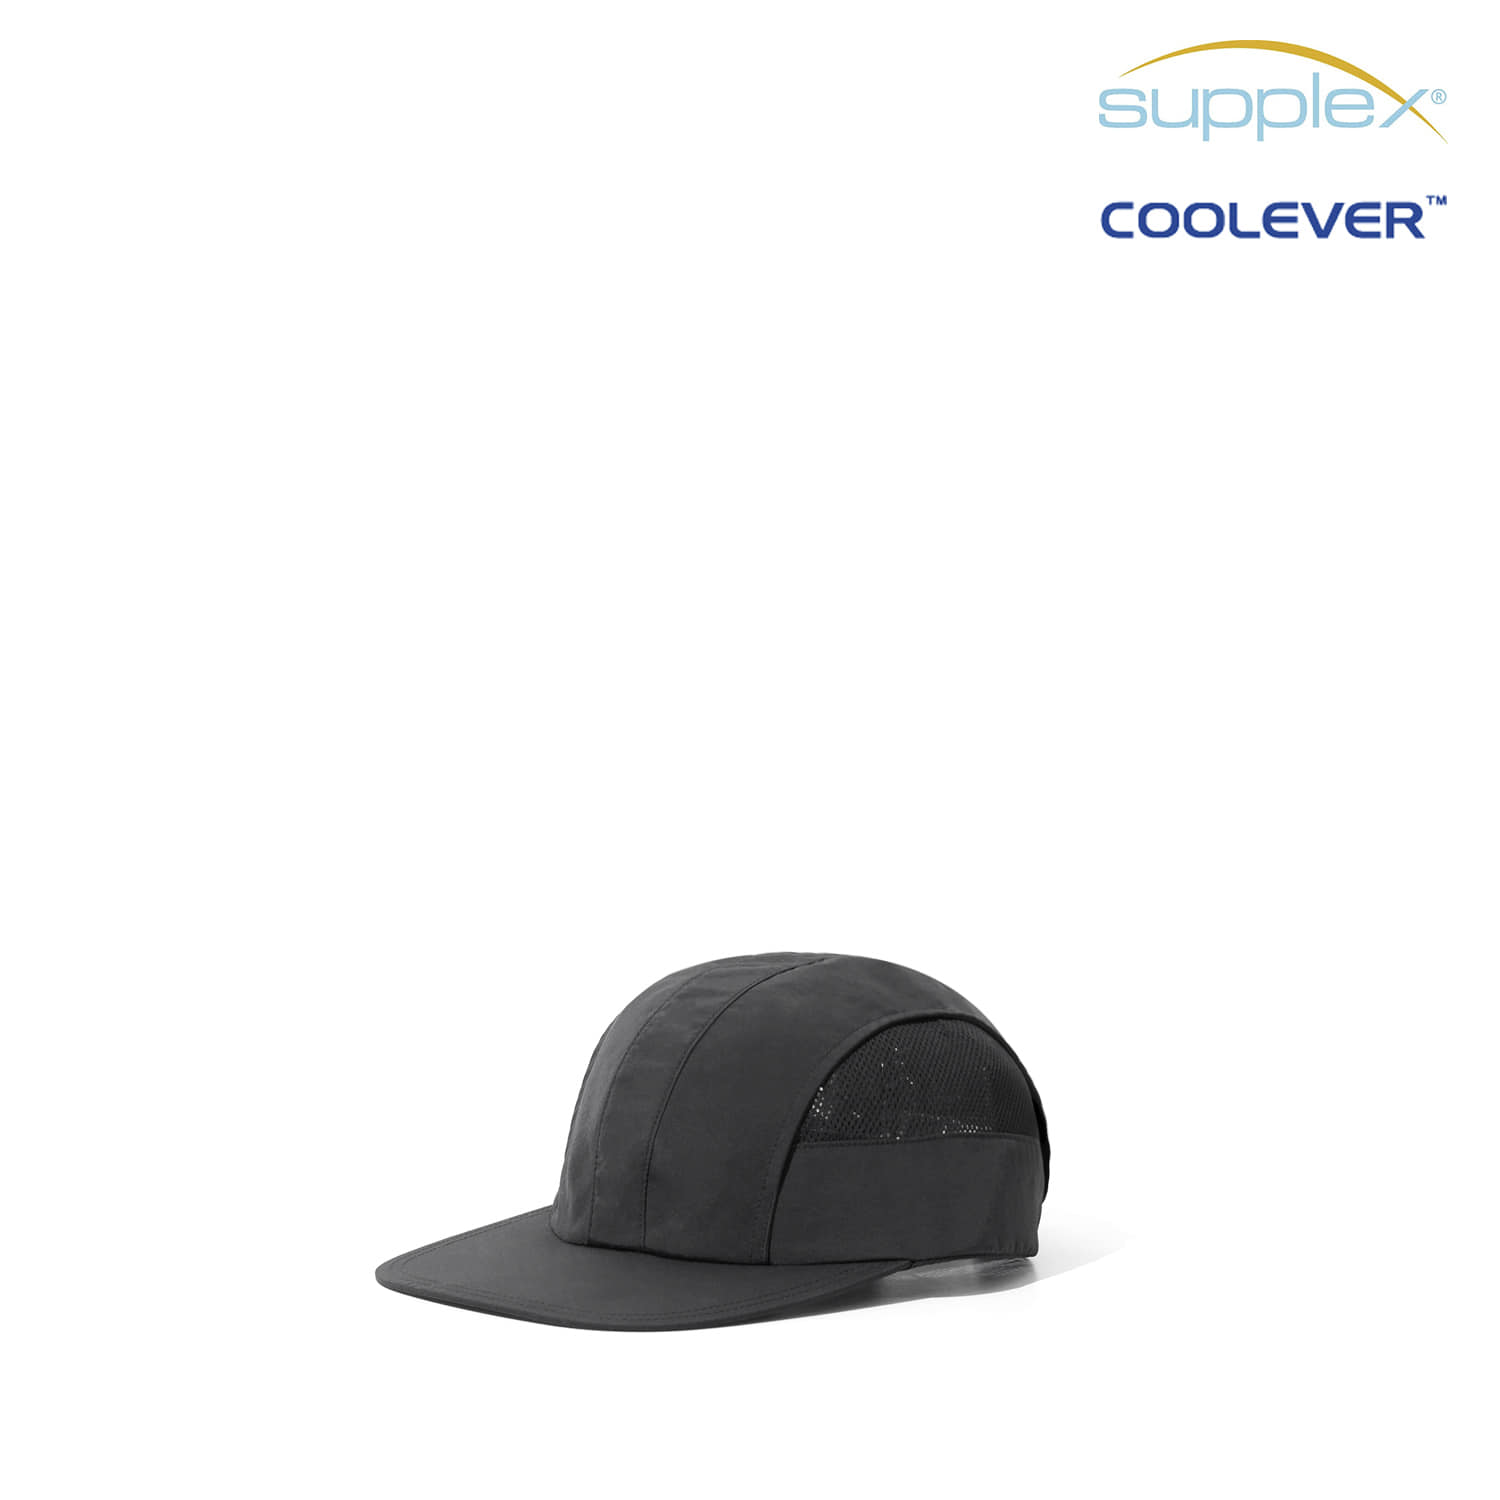 WORTHWHILE MOVEMENT월스와일무브먼트 Beetle Cap (Black) Supplex® & Coolever™